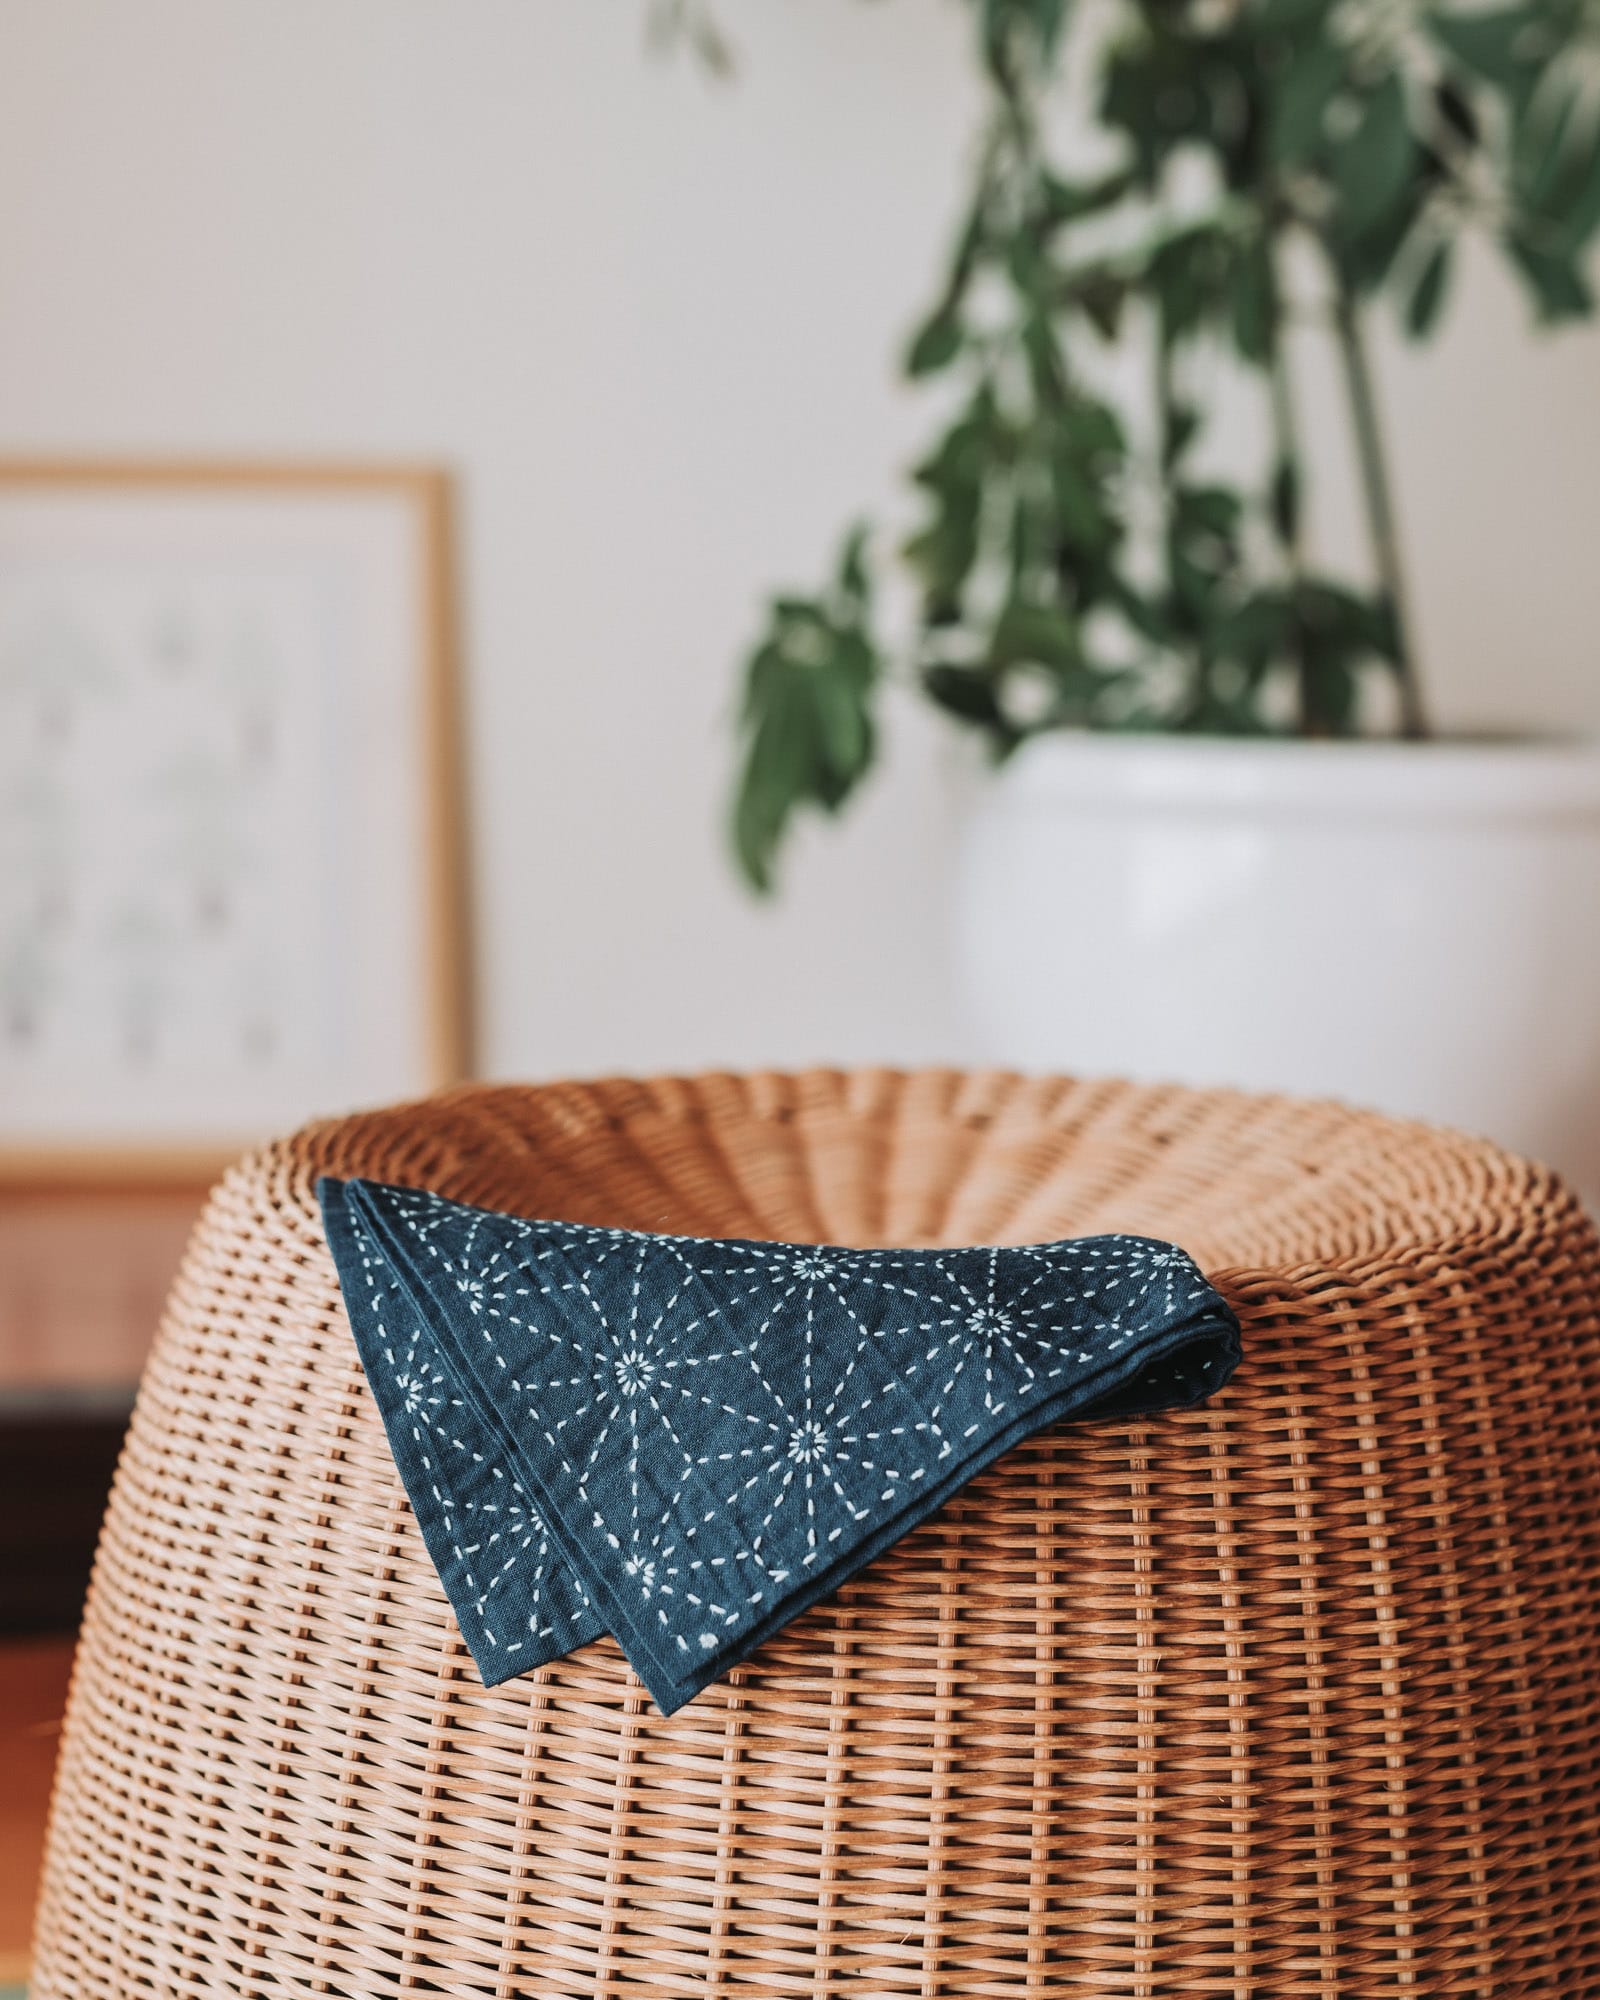 Asanoha pattern on a kitchen cloth draped across a rattan stool.